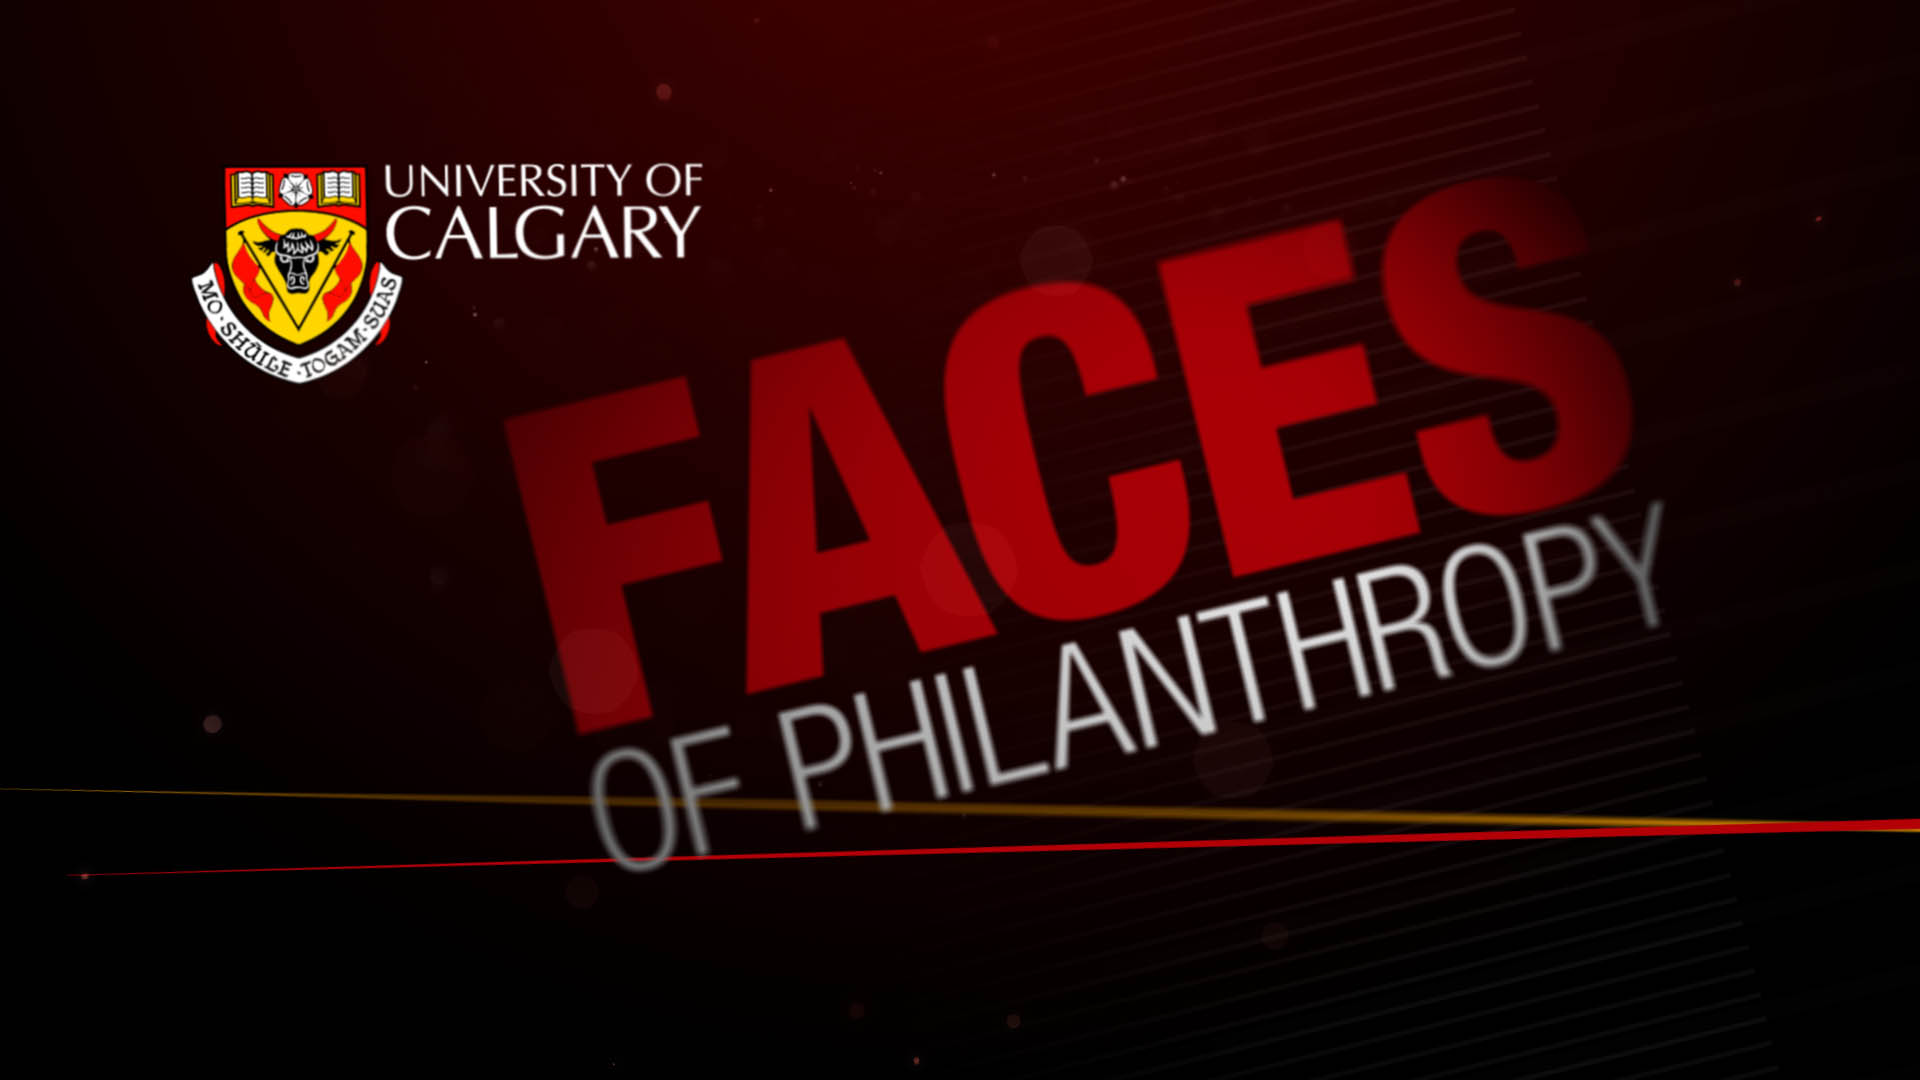 Faces of Philanthropy – University of Calgary